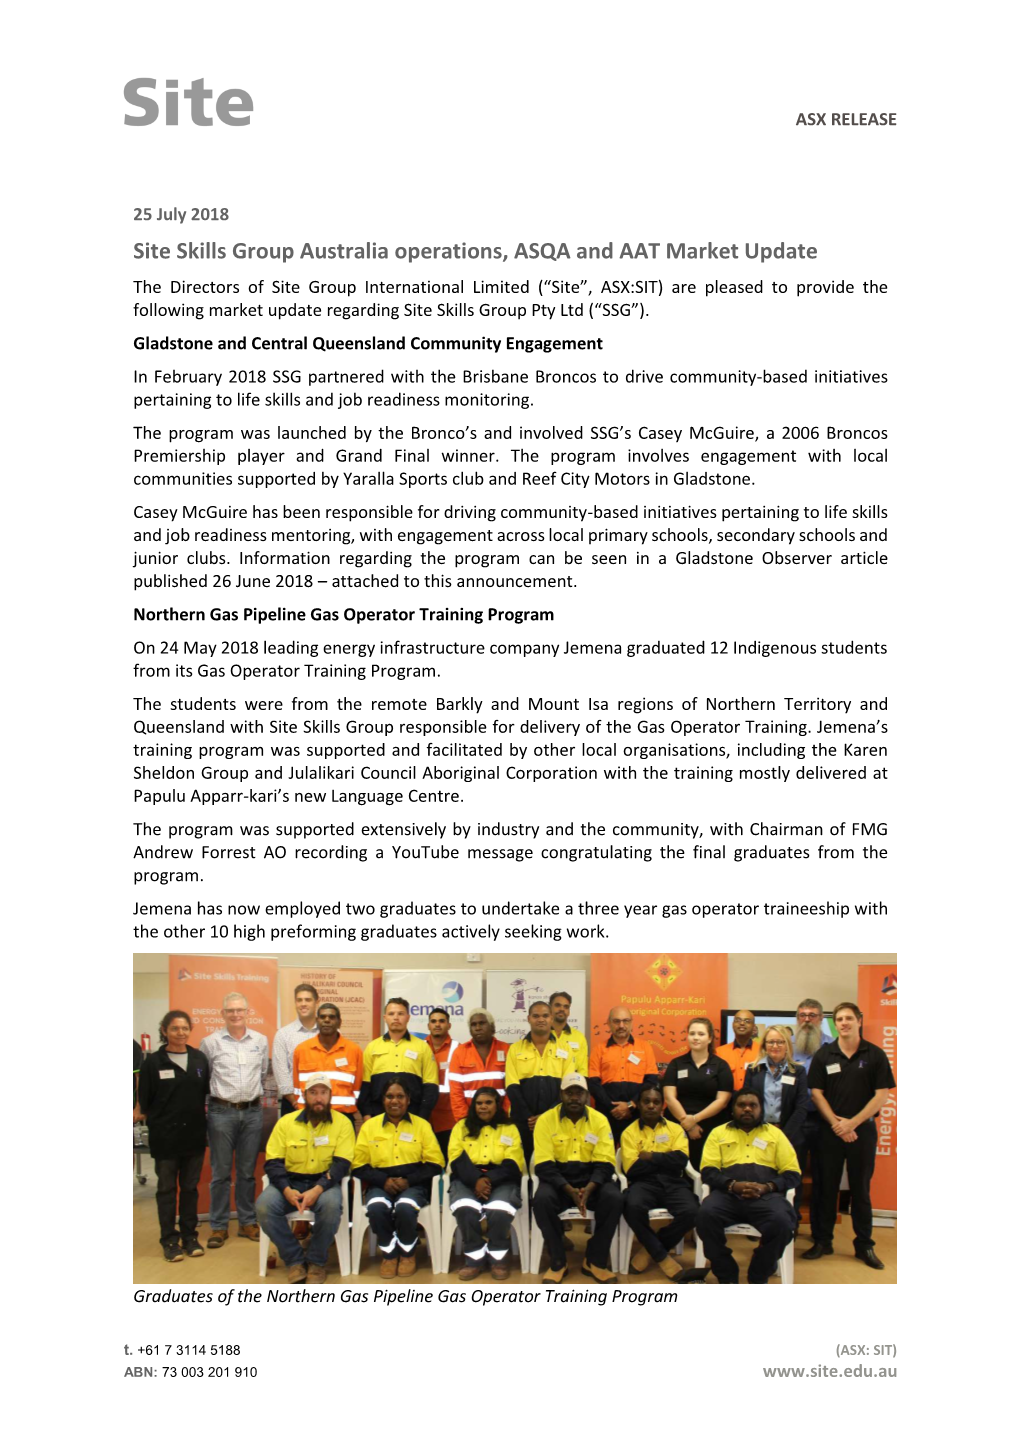 Site Skills Group Australia Operations, ASQA and AAT Market